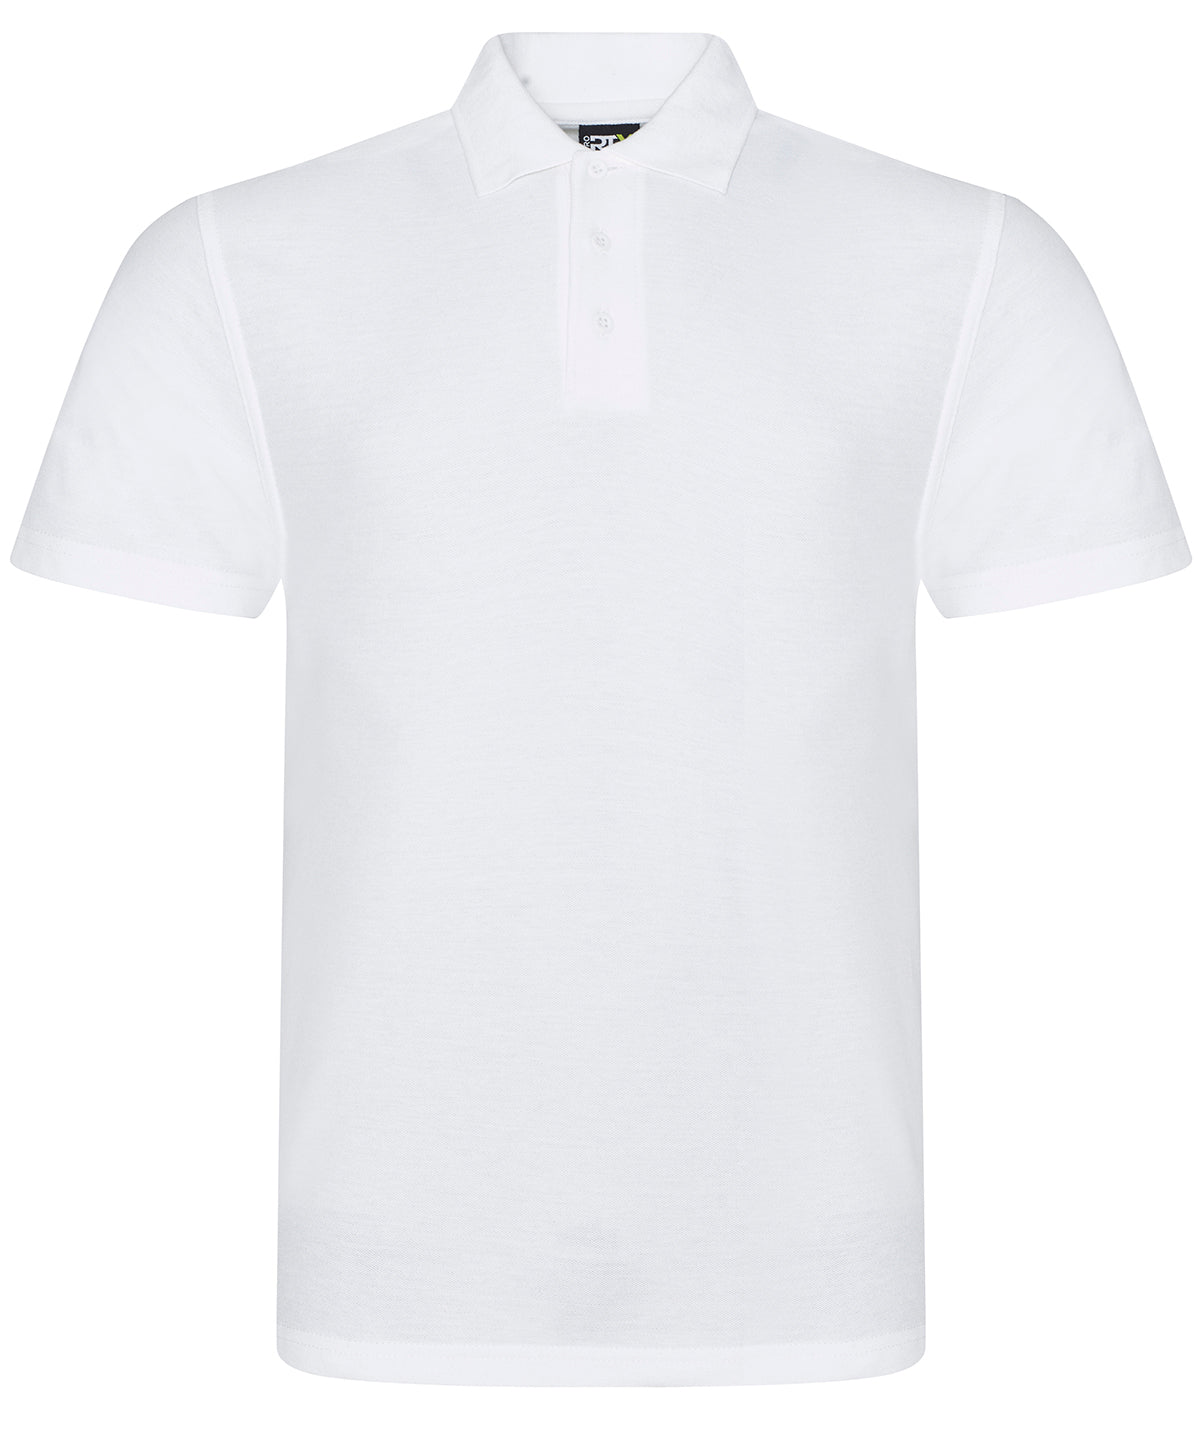 Unisex White Polo Shirt With East Coast College Logo